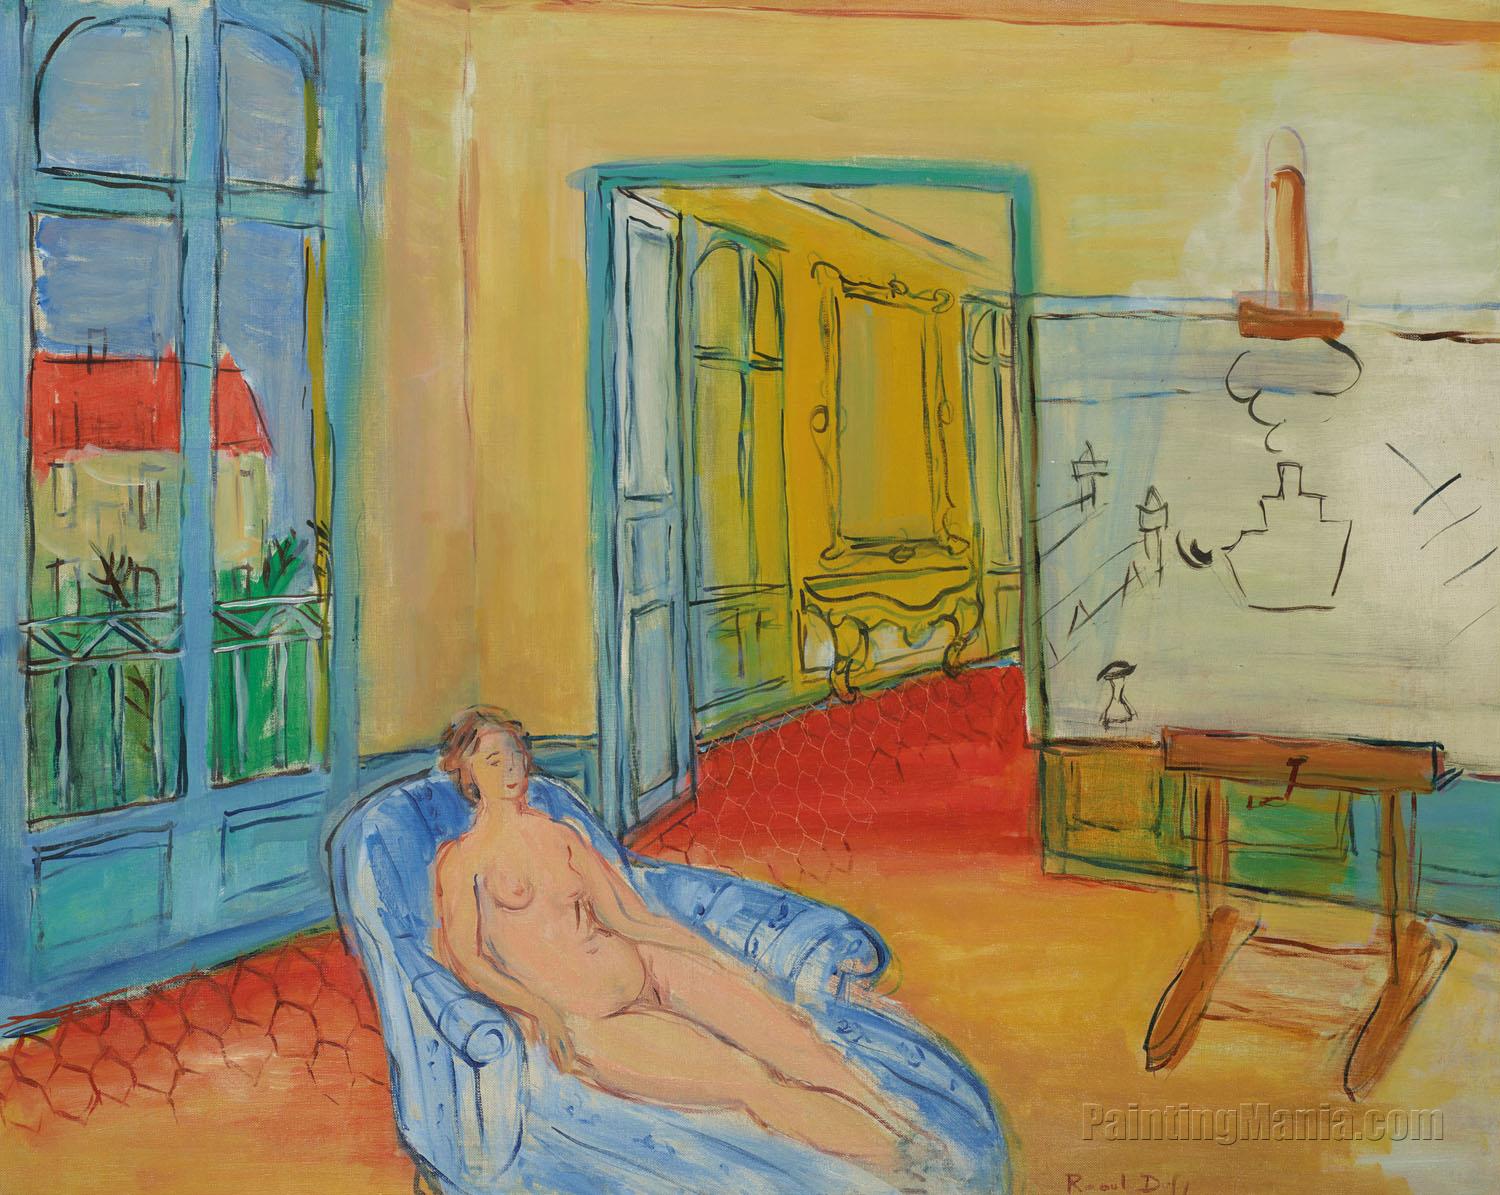 Nude in the Studio on Place Arago in Perpignan